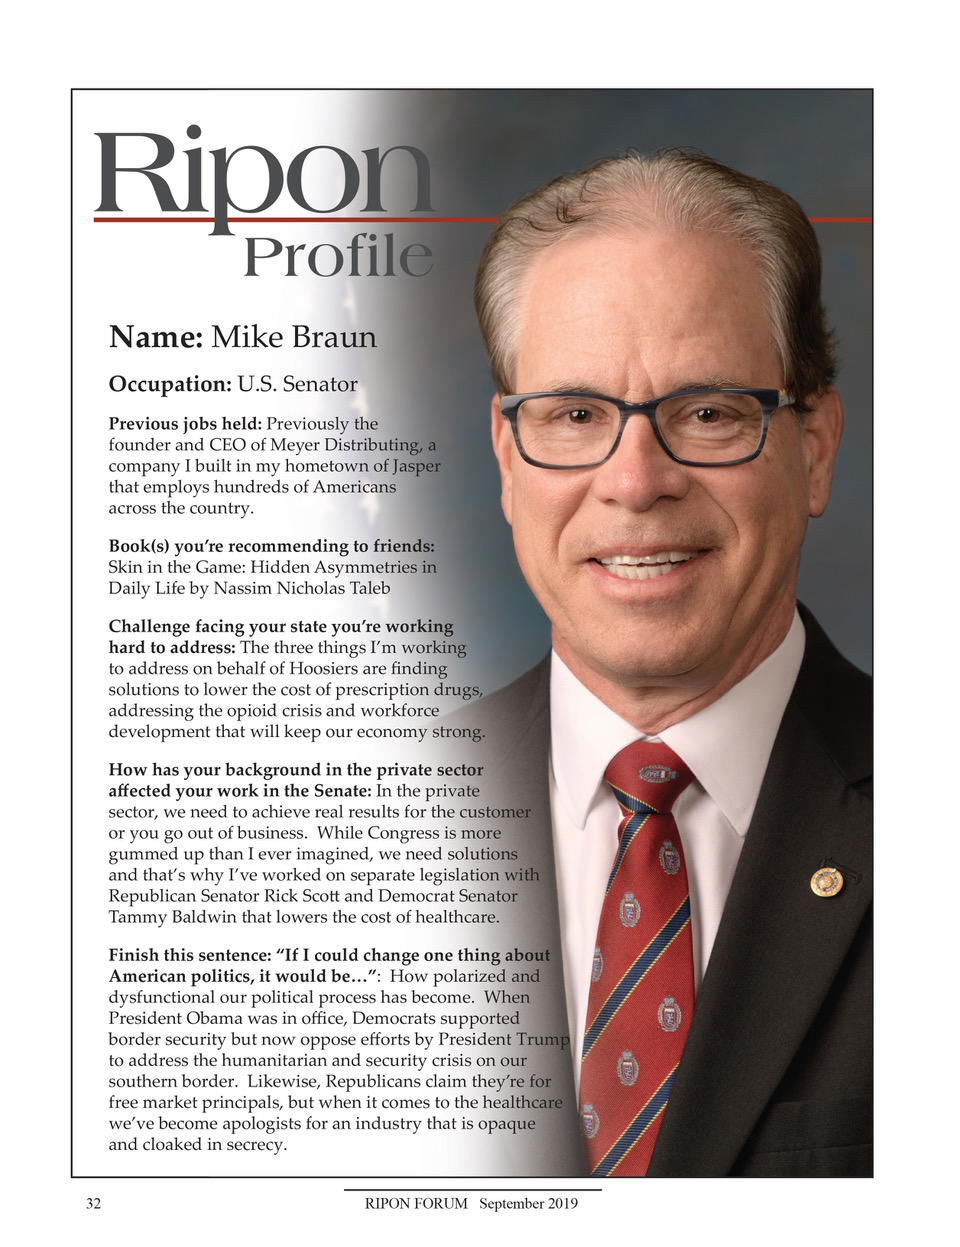 Ripon Profile of Mike Braun